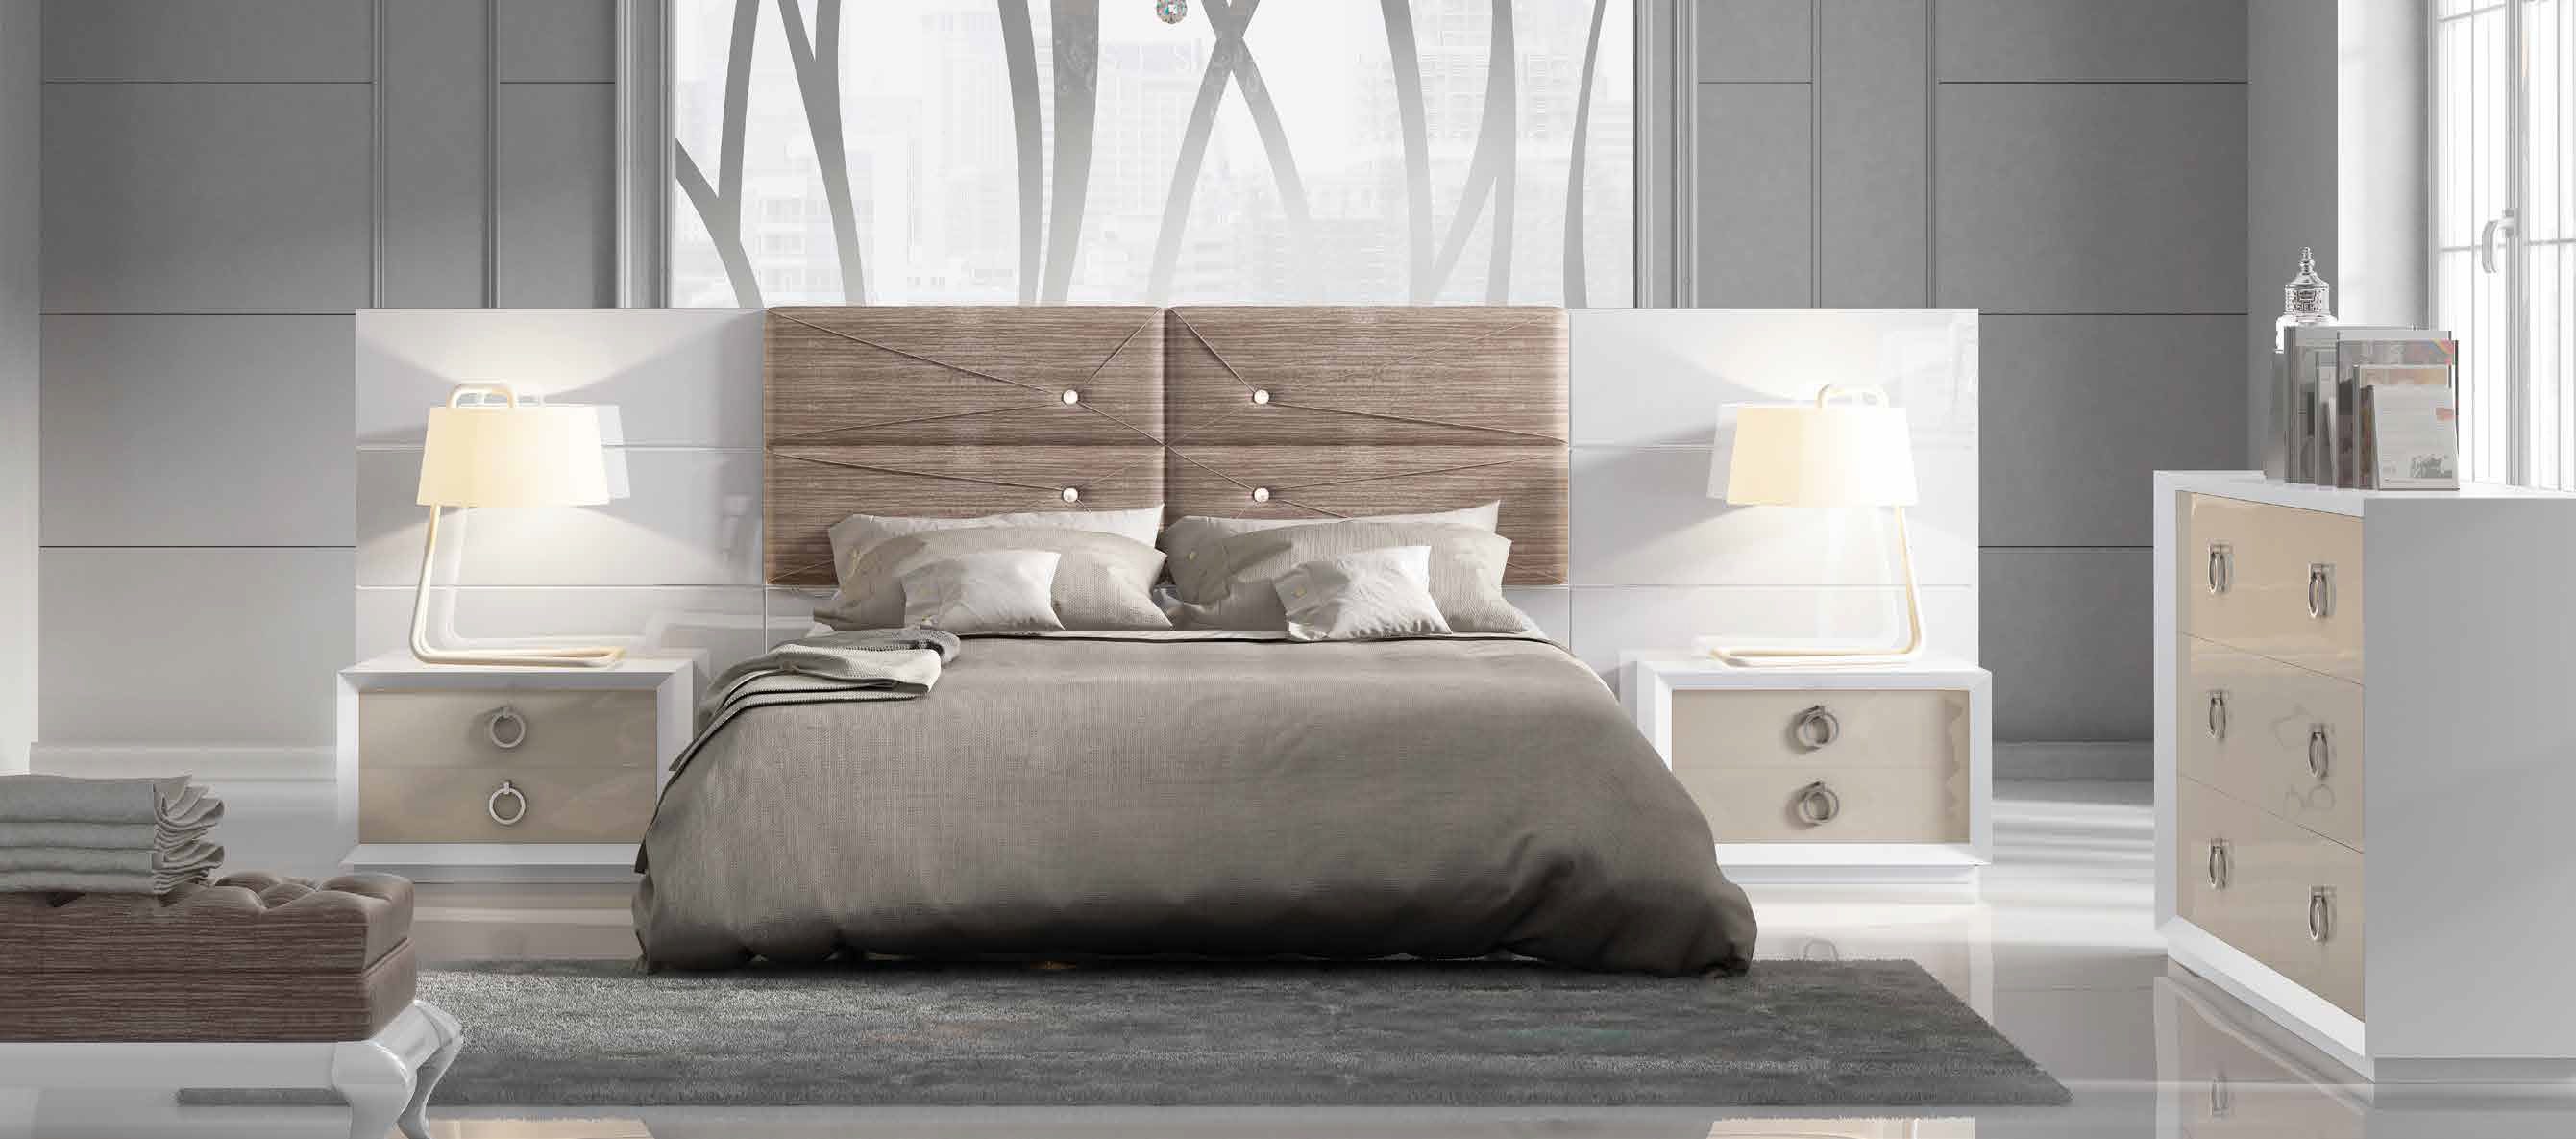 Brands Franco Furniture Bedrooms vol3, Spain DOR 75